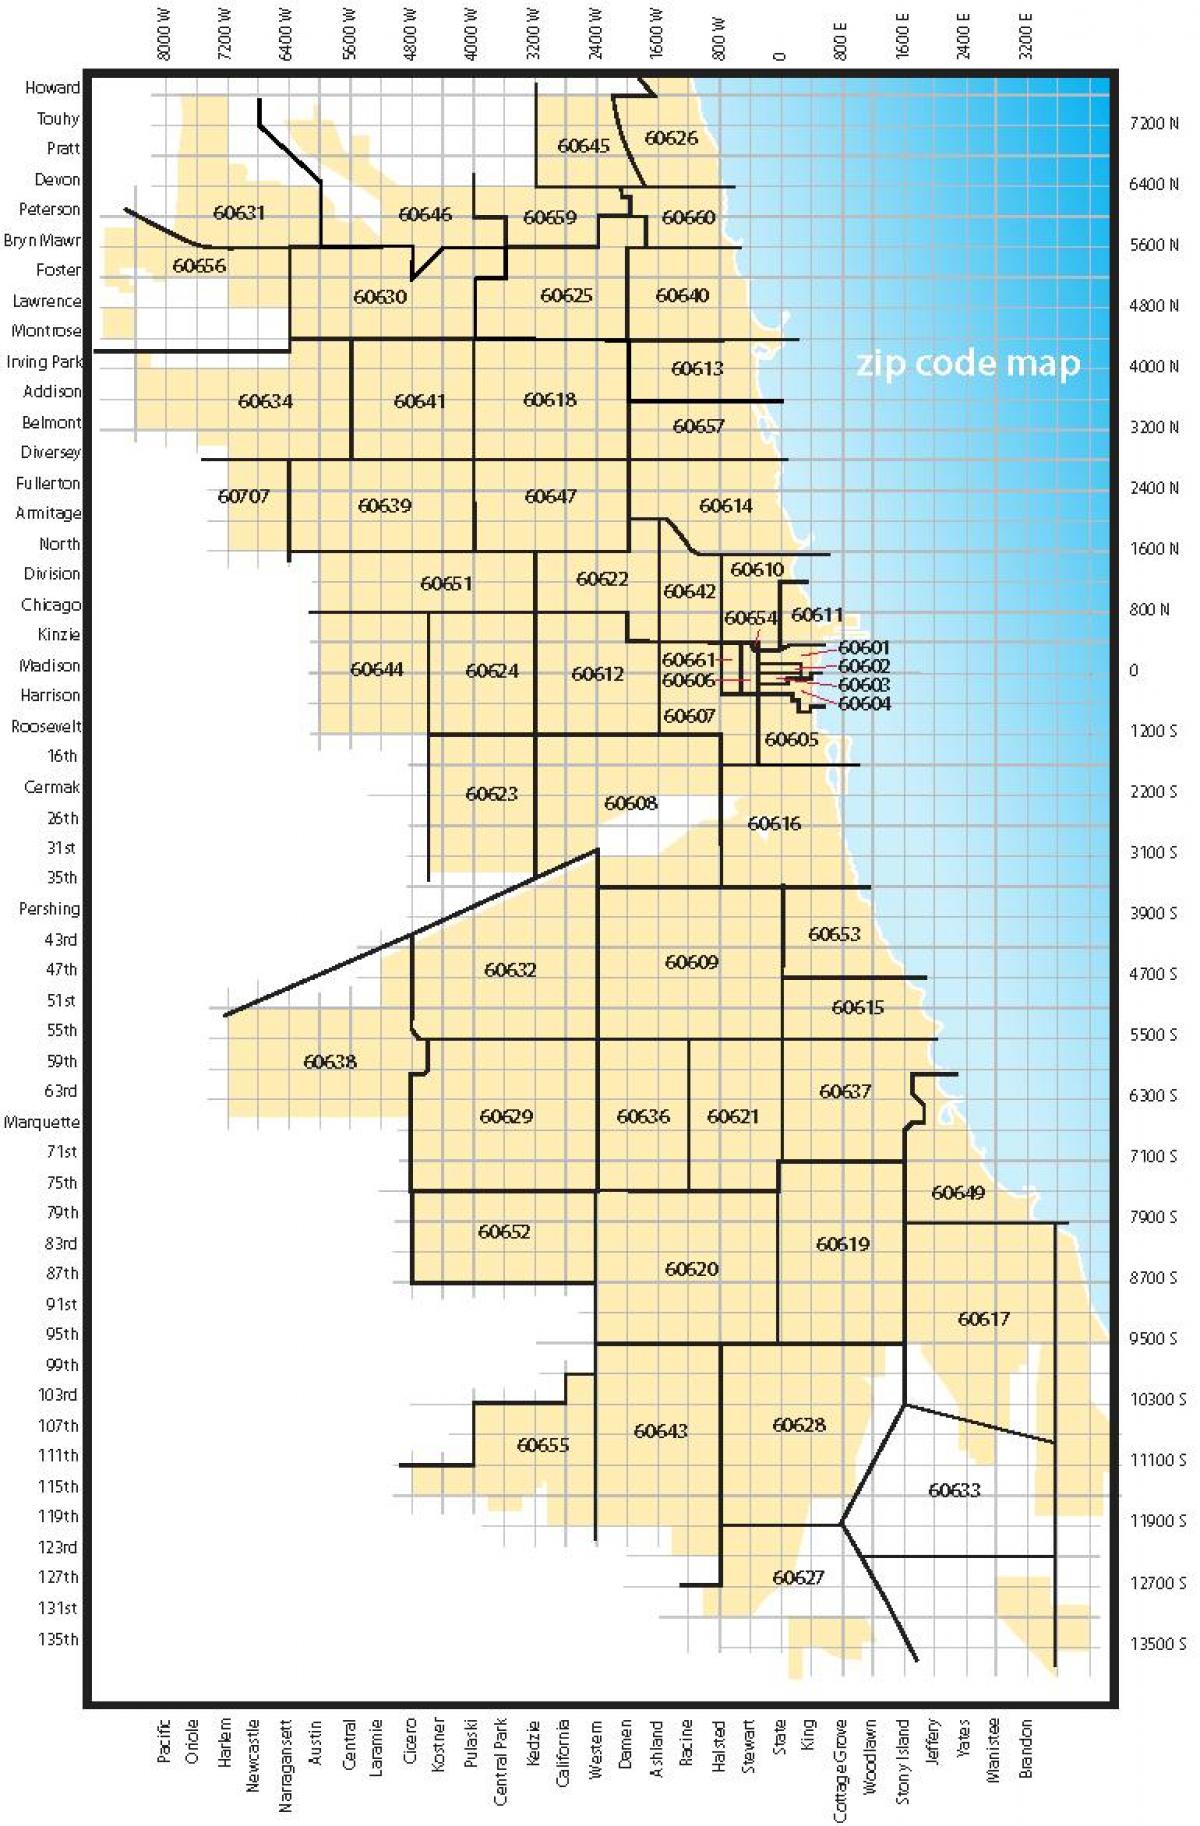 harta Chicago coduri zip